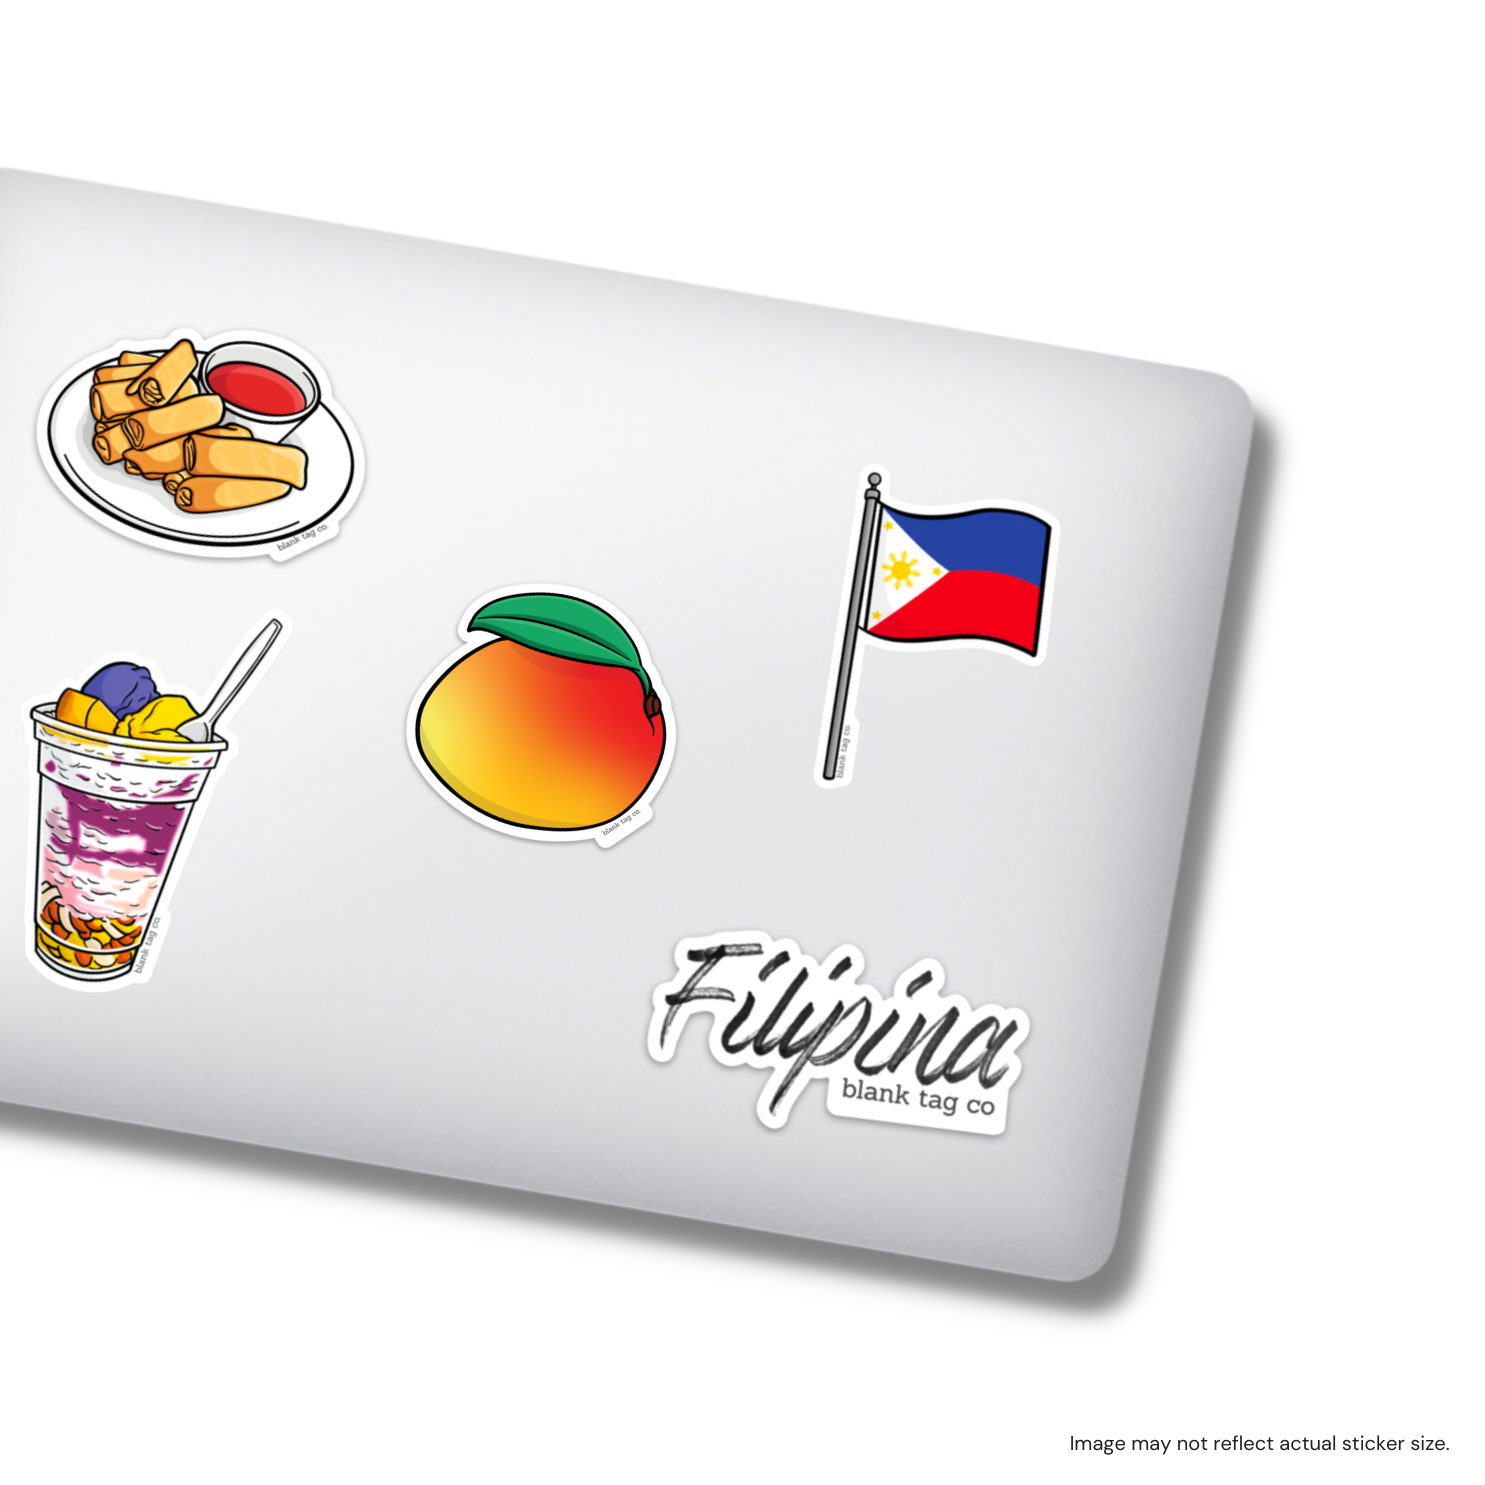 The Philippines Flag Sticker